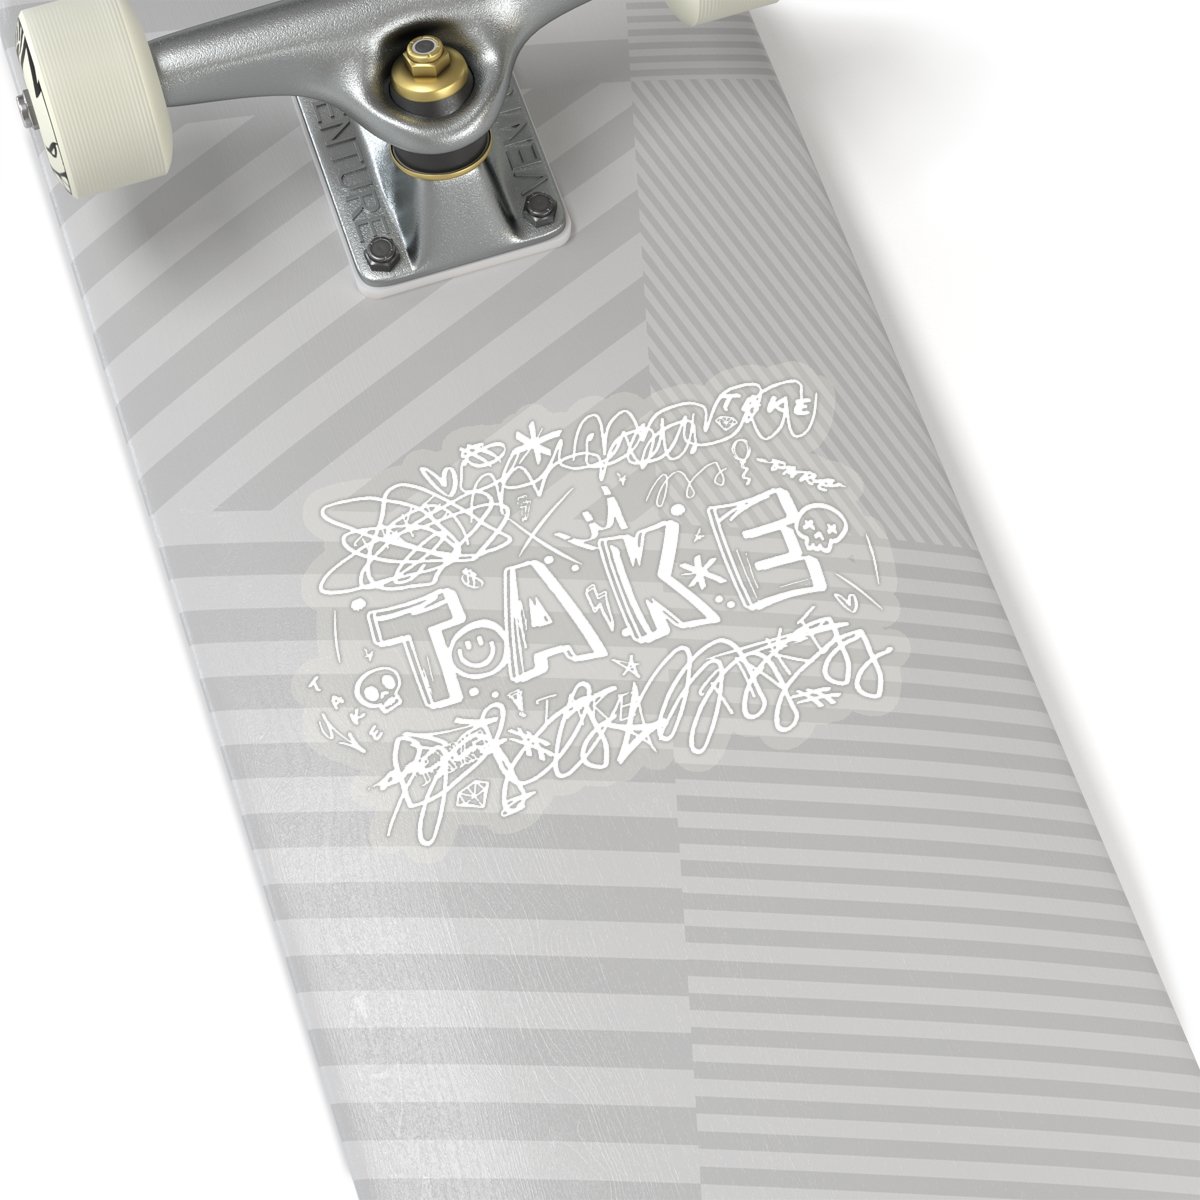 Take – Graffiti Logo Die Cut Stickers